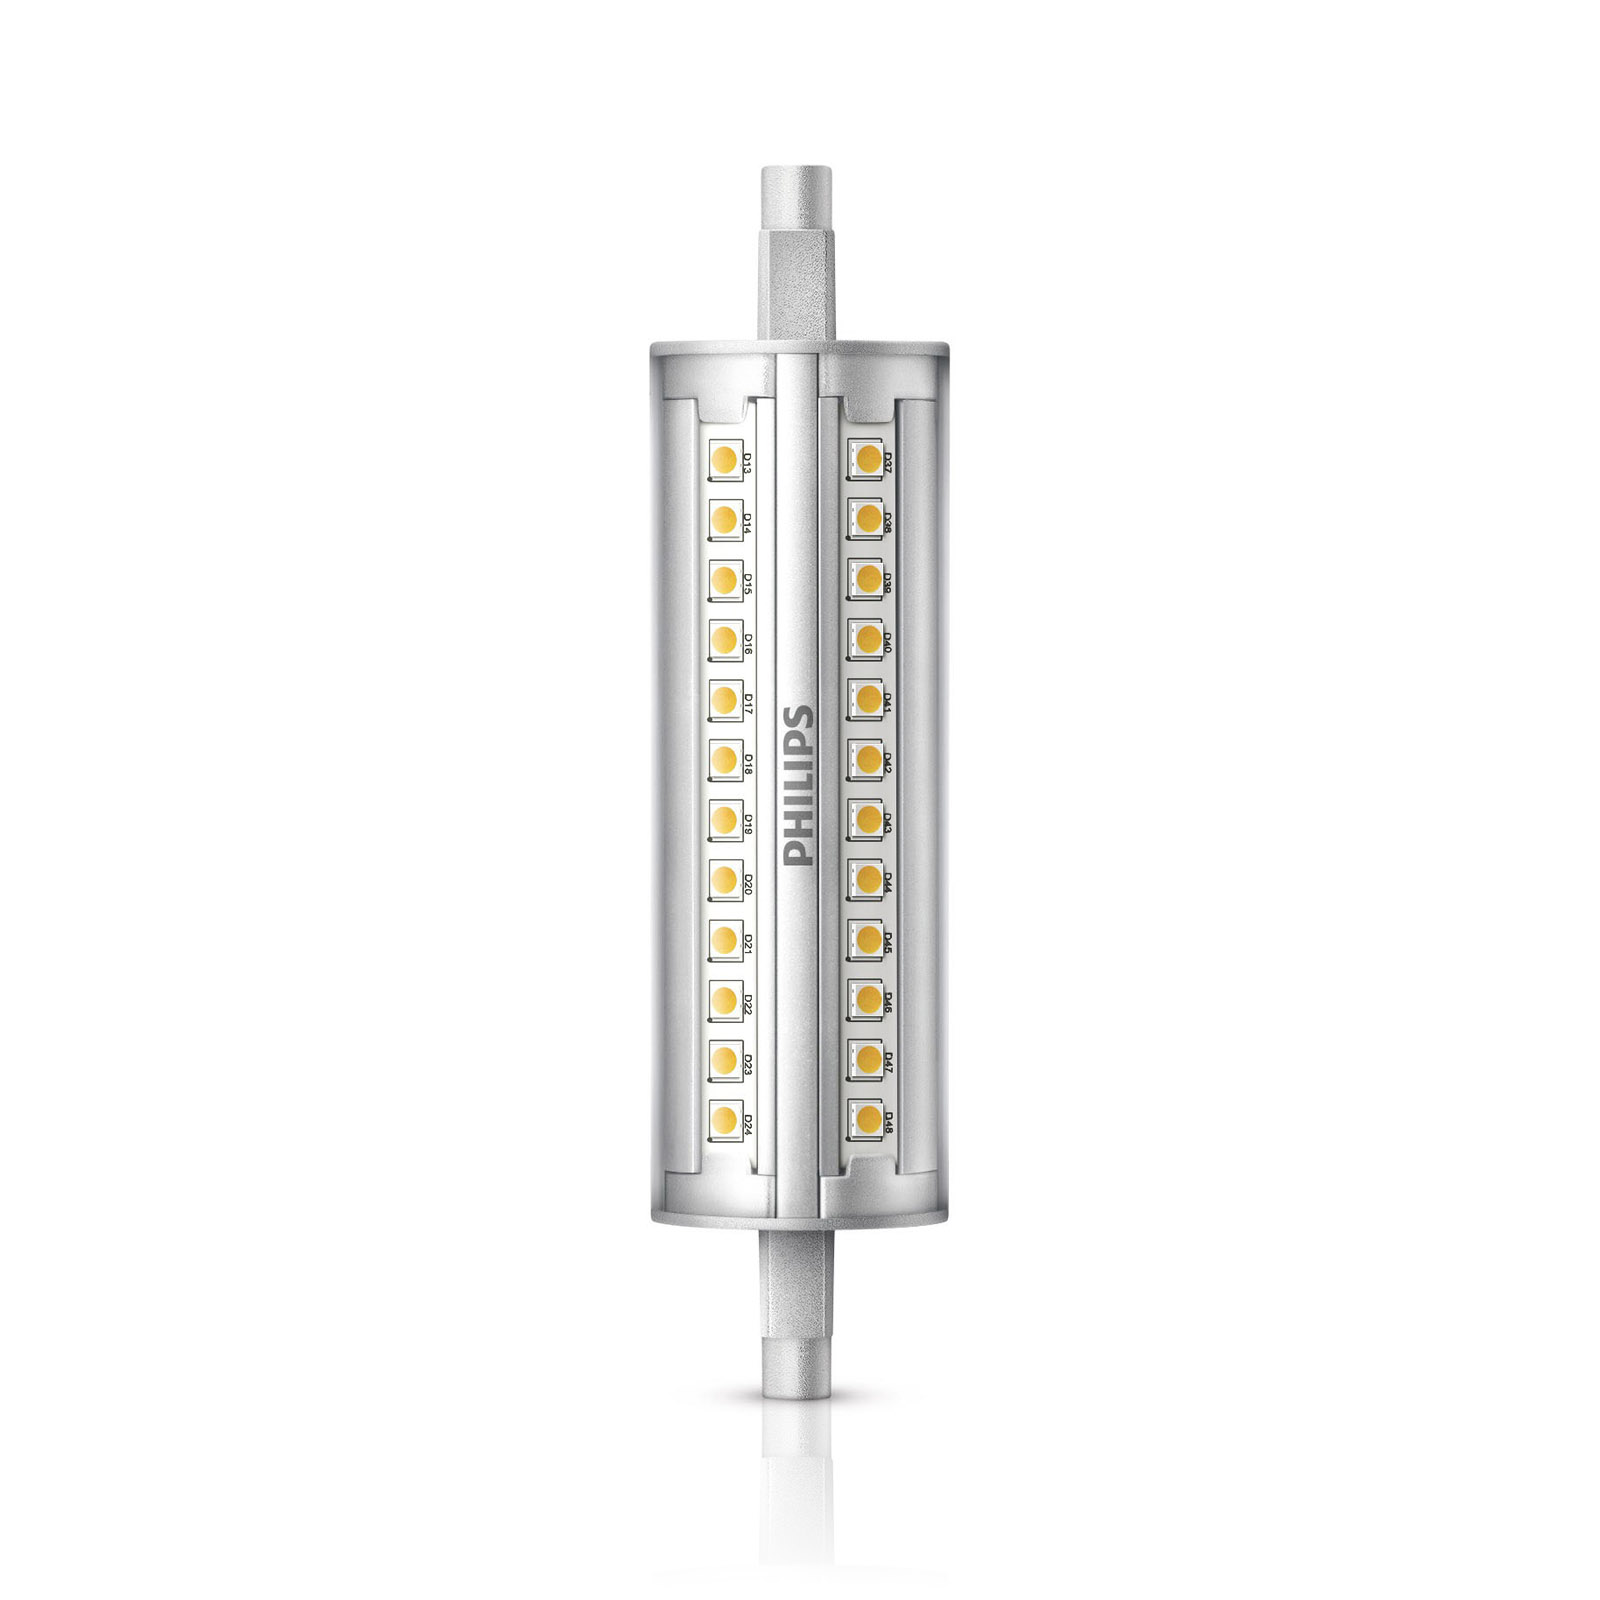 LED lamp Philips CorePro R7S 118mm 14-100W 830 DIM 3000K 1600lm